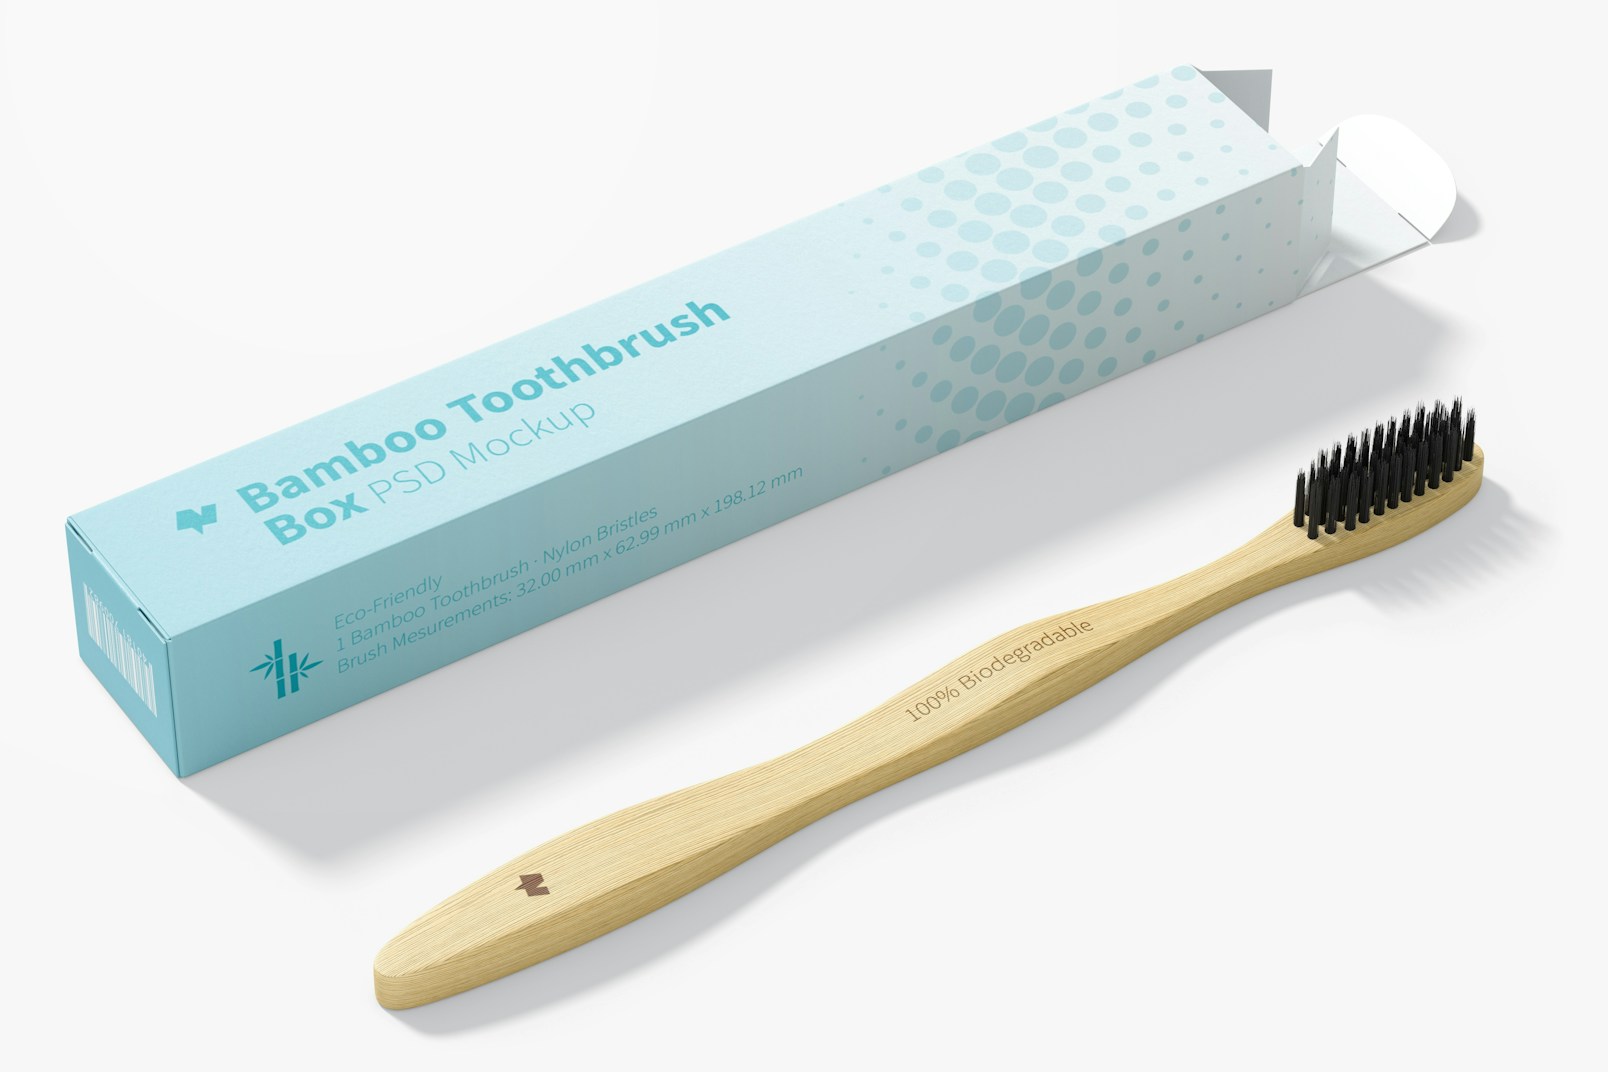 Bamboo Toothbrush with Box Mockup